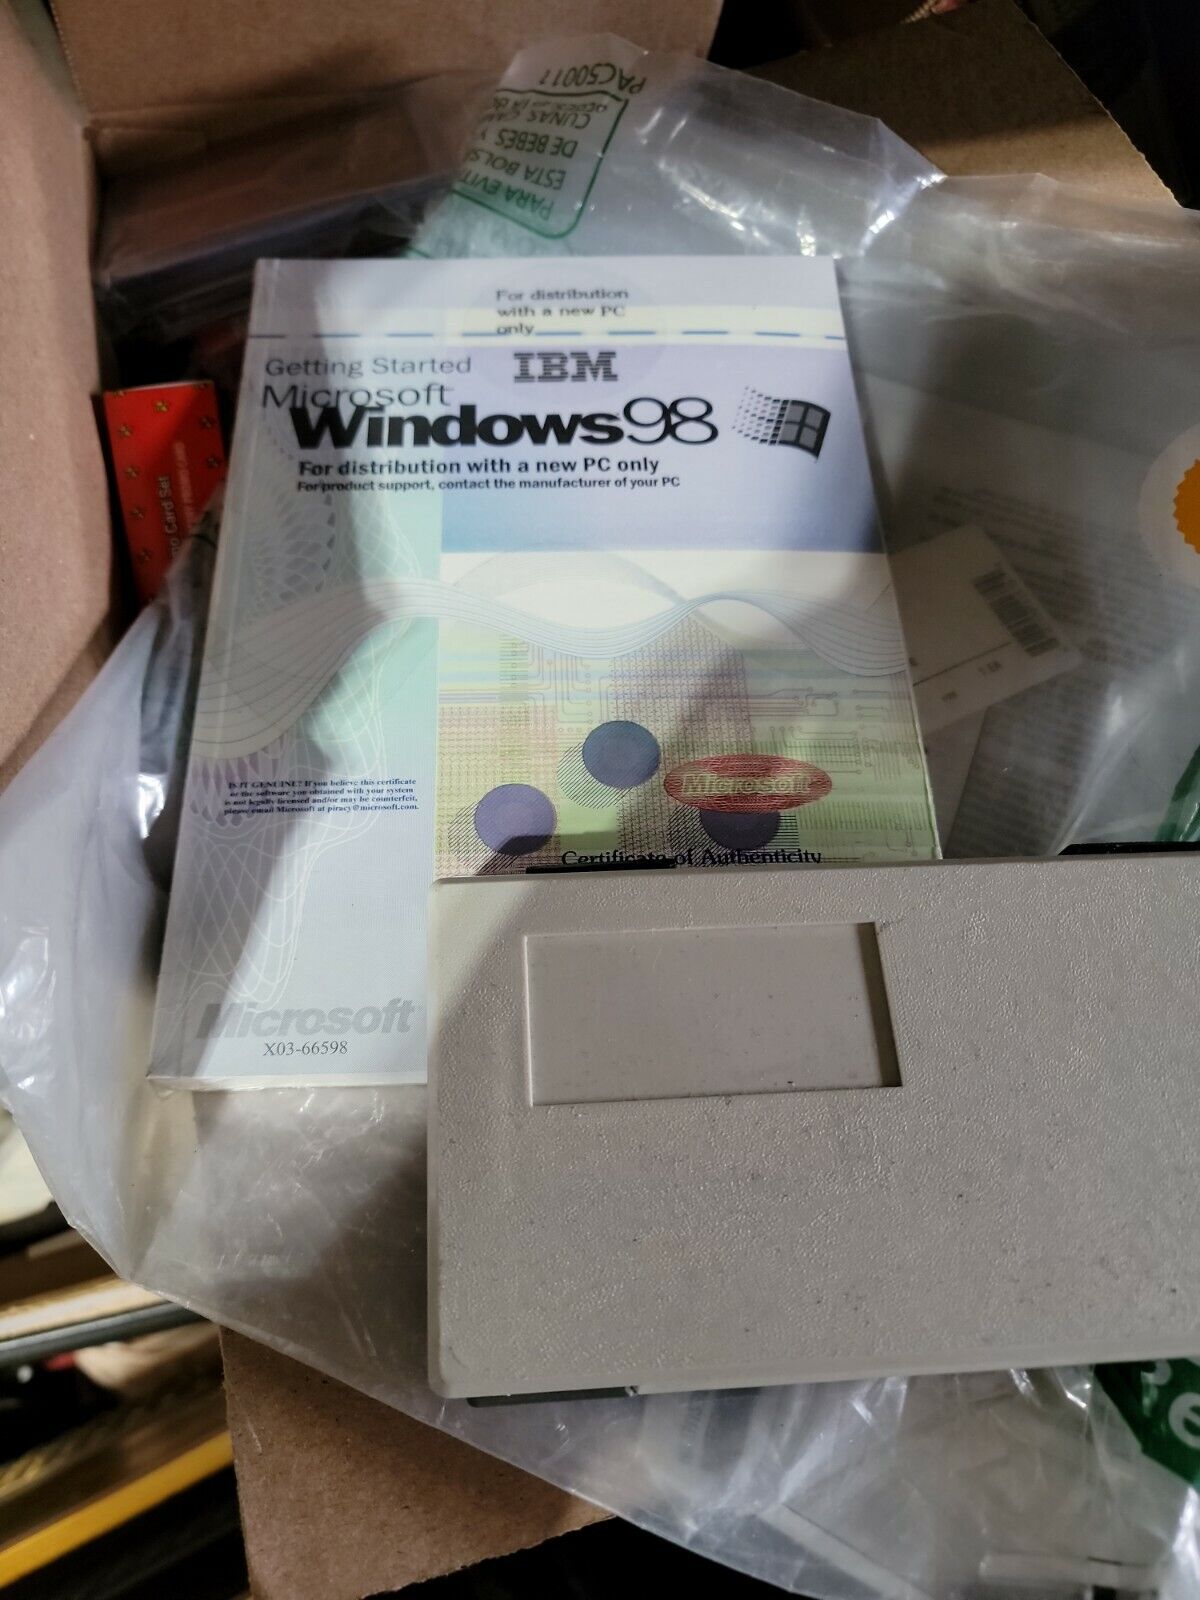 MICROSOFT WINDOWS 98 - [Unopened] Includes Product Key IBM NO CD JUST KEY